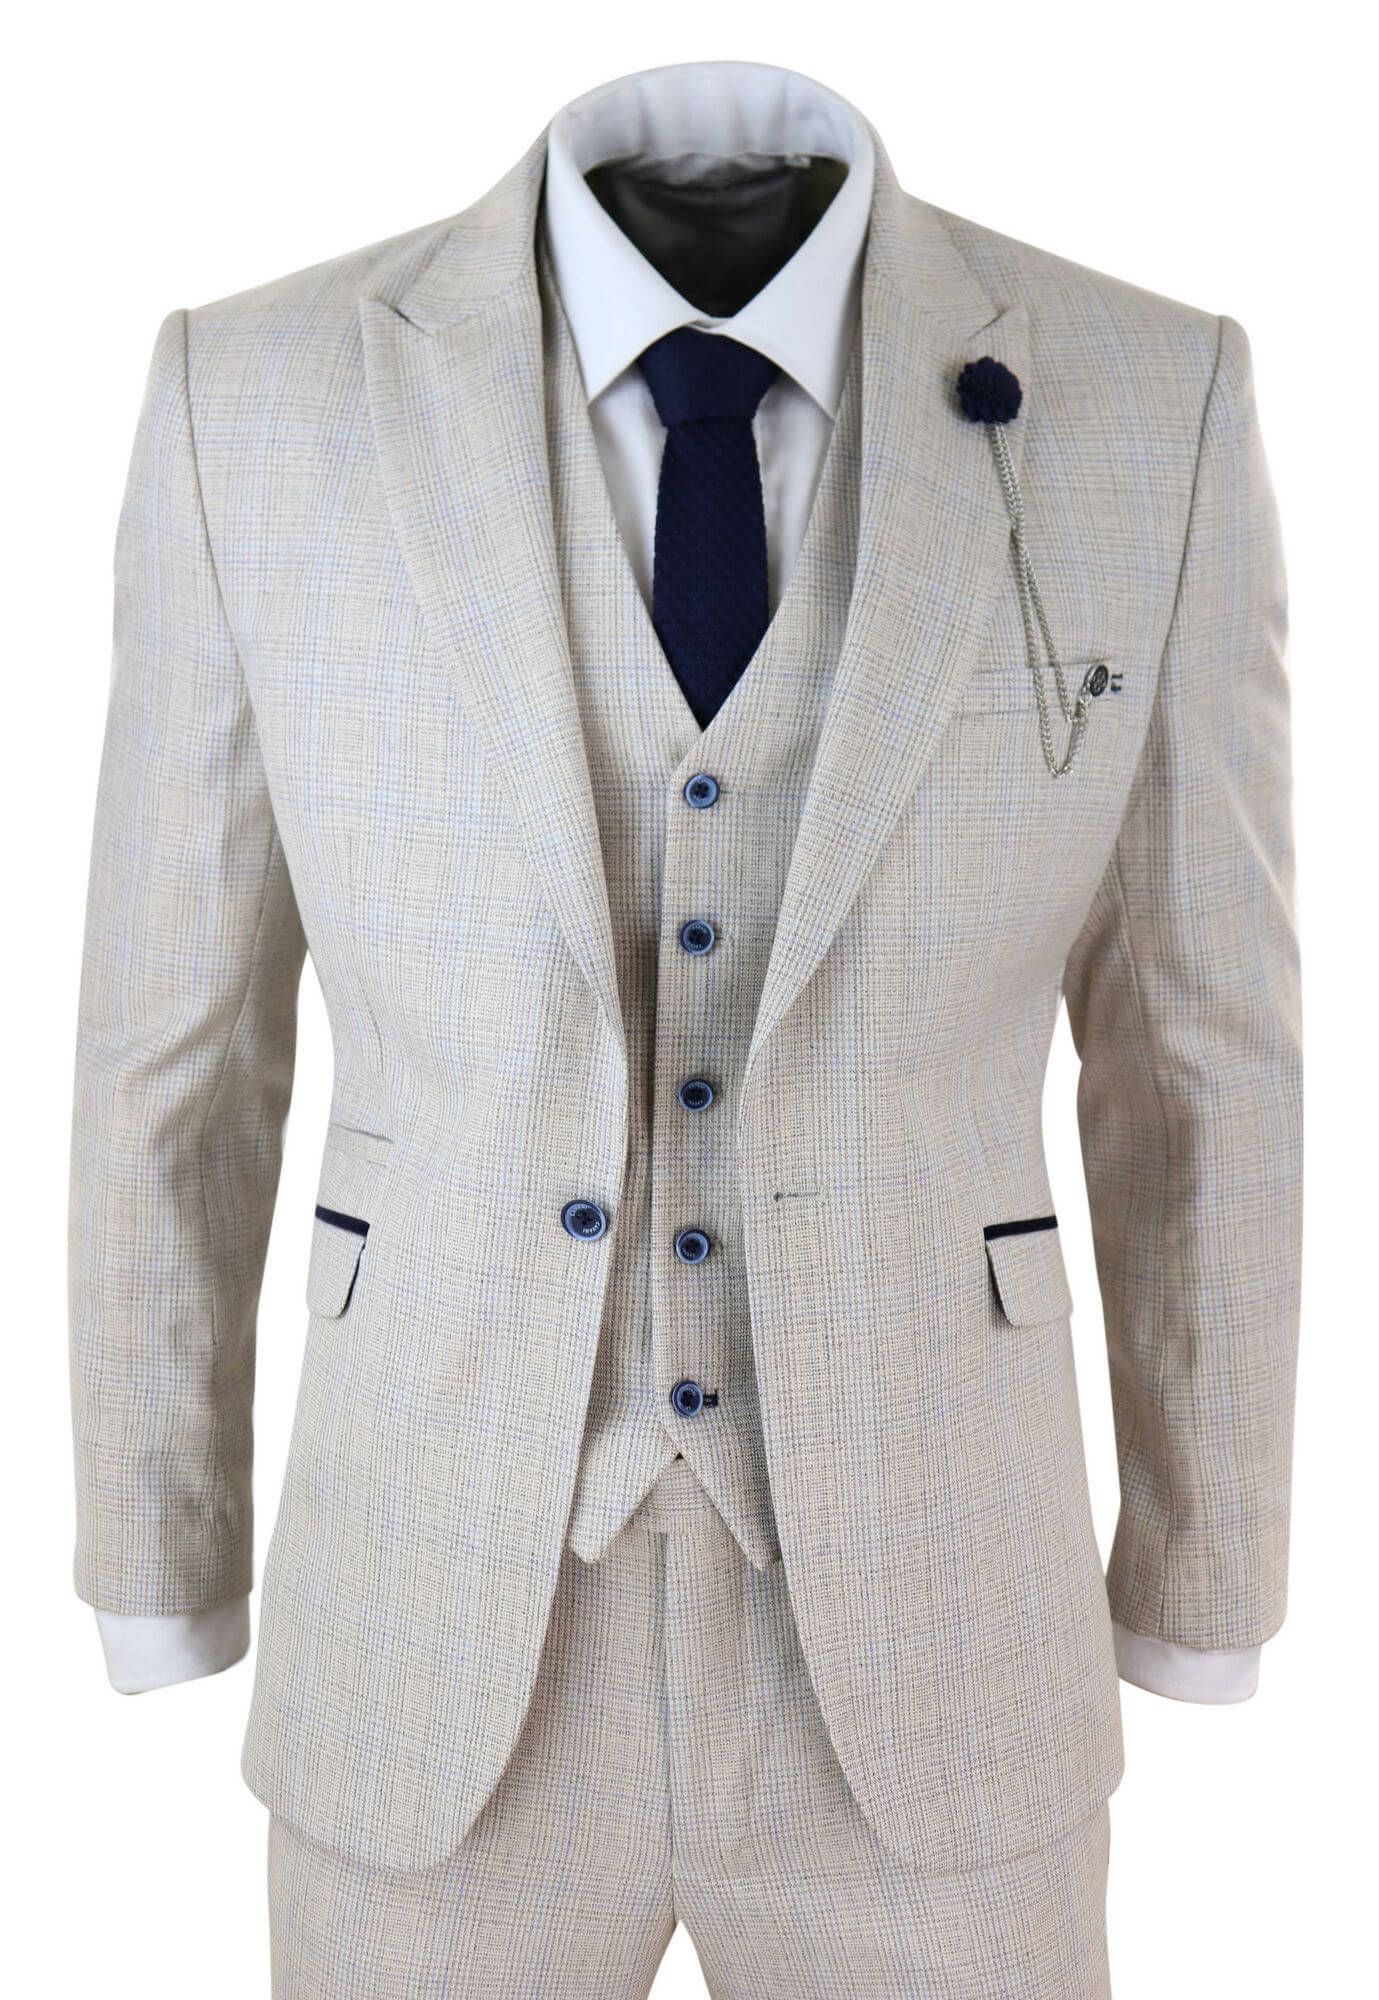 Wemaliyzd Mens 3 Pieces Jacquard Wedding Suit Classic Fit Blazer Vest Pants 